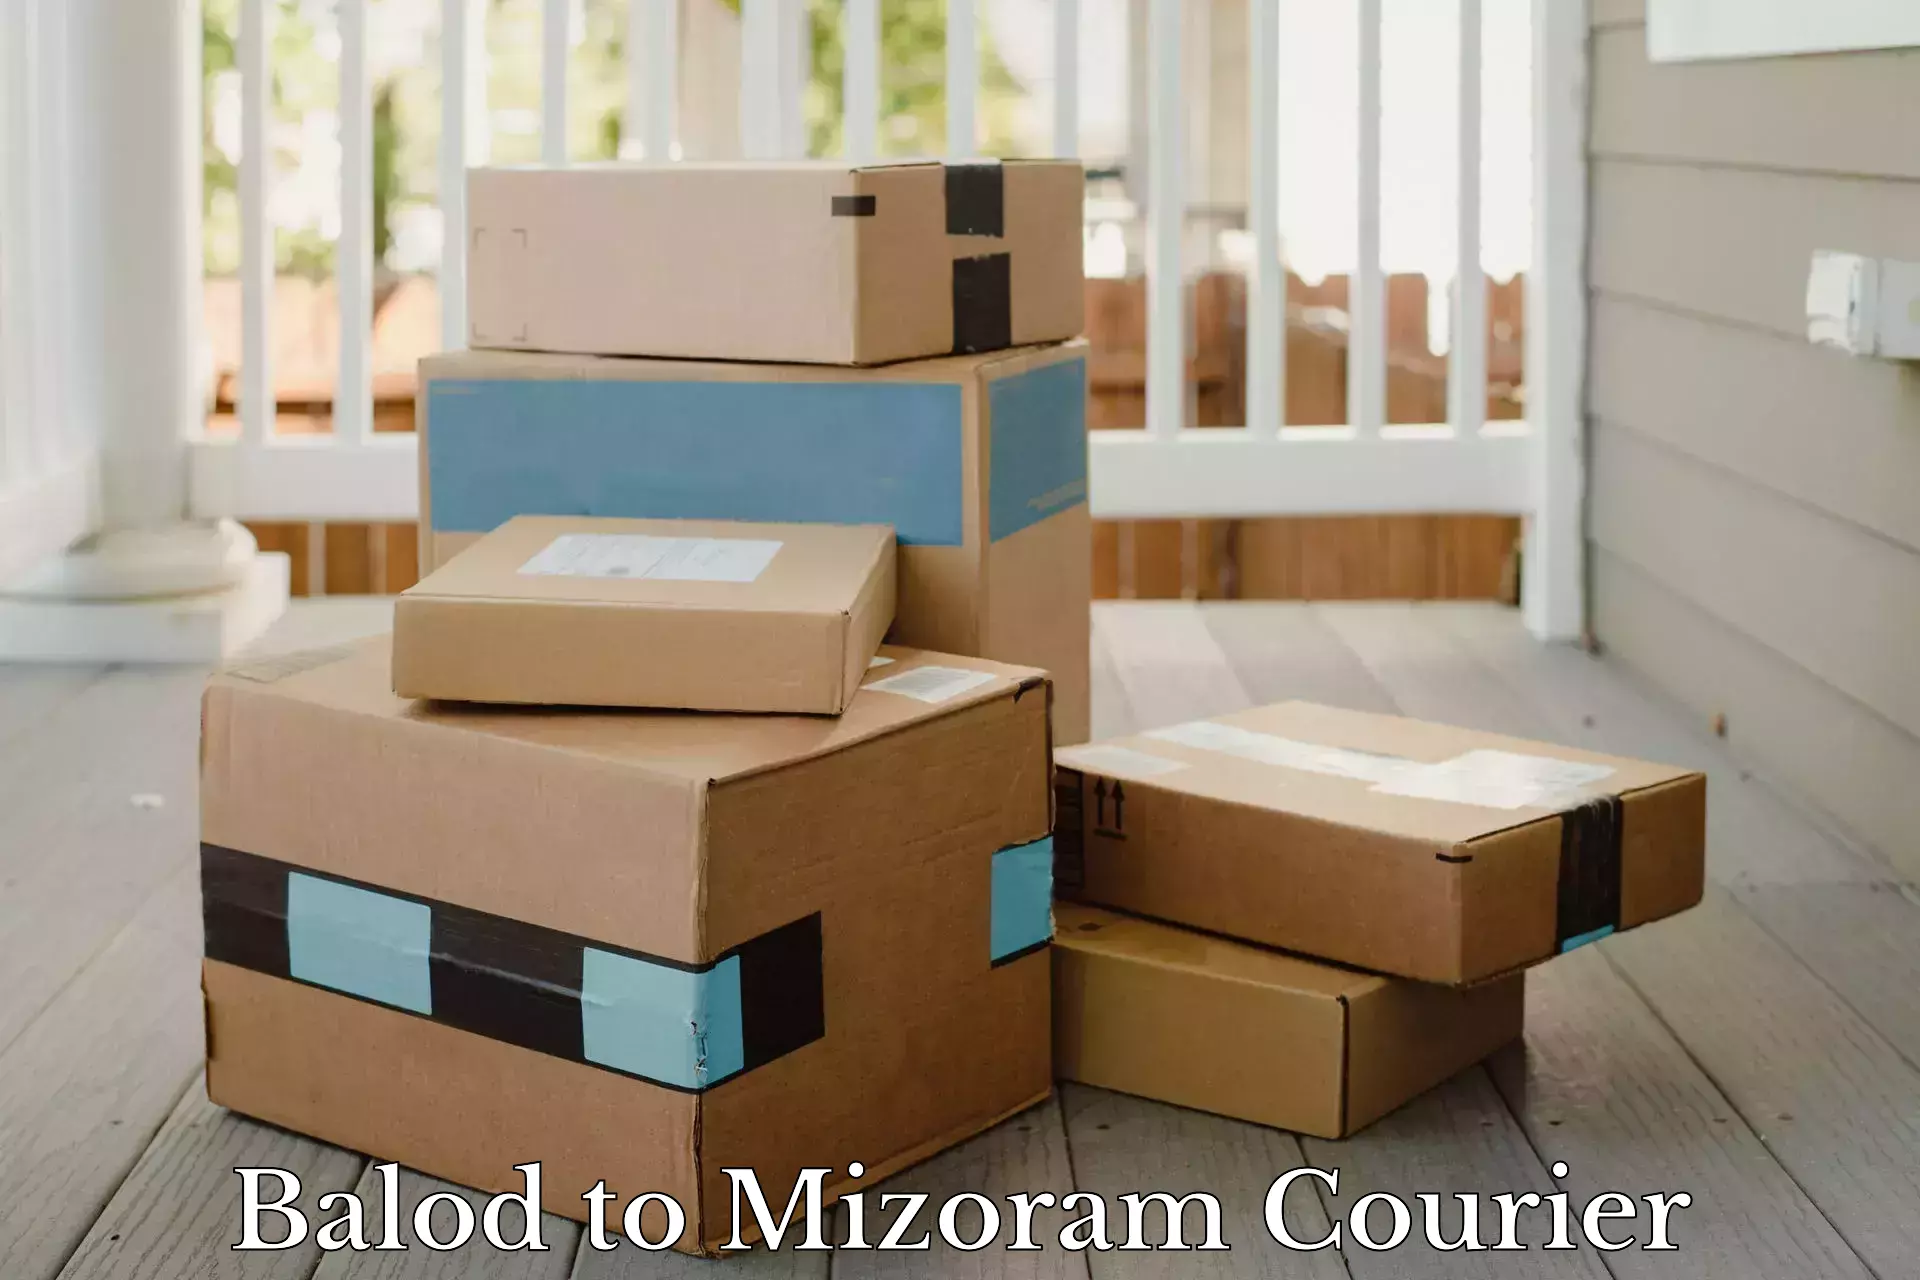 Courier service innovation Balod to Mizoram